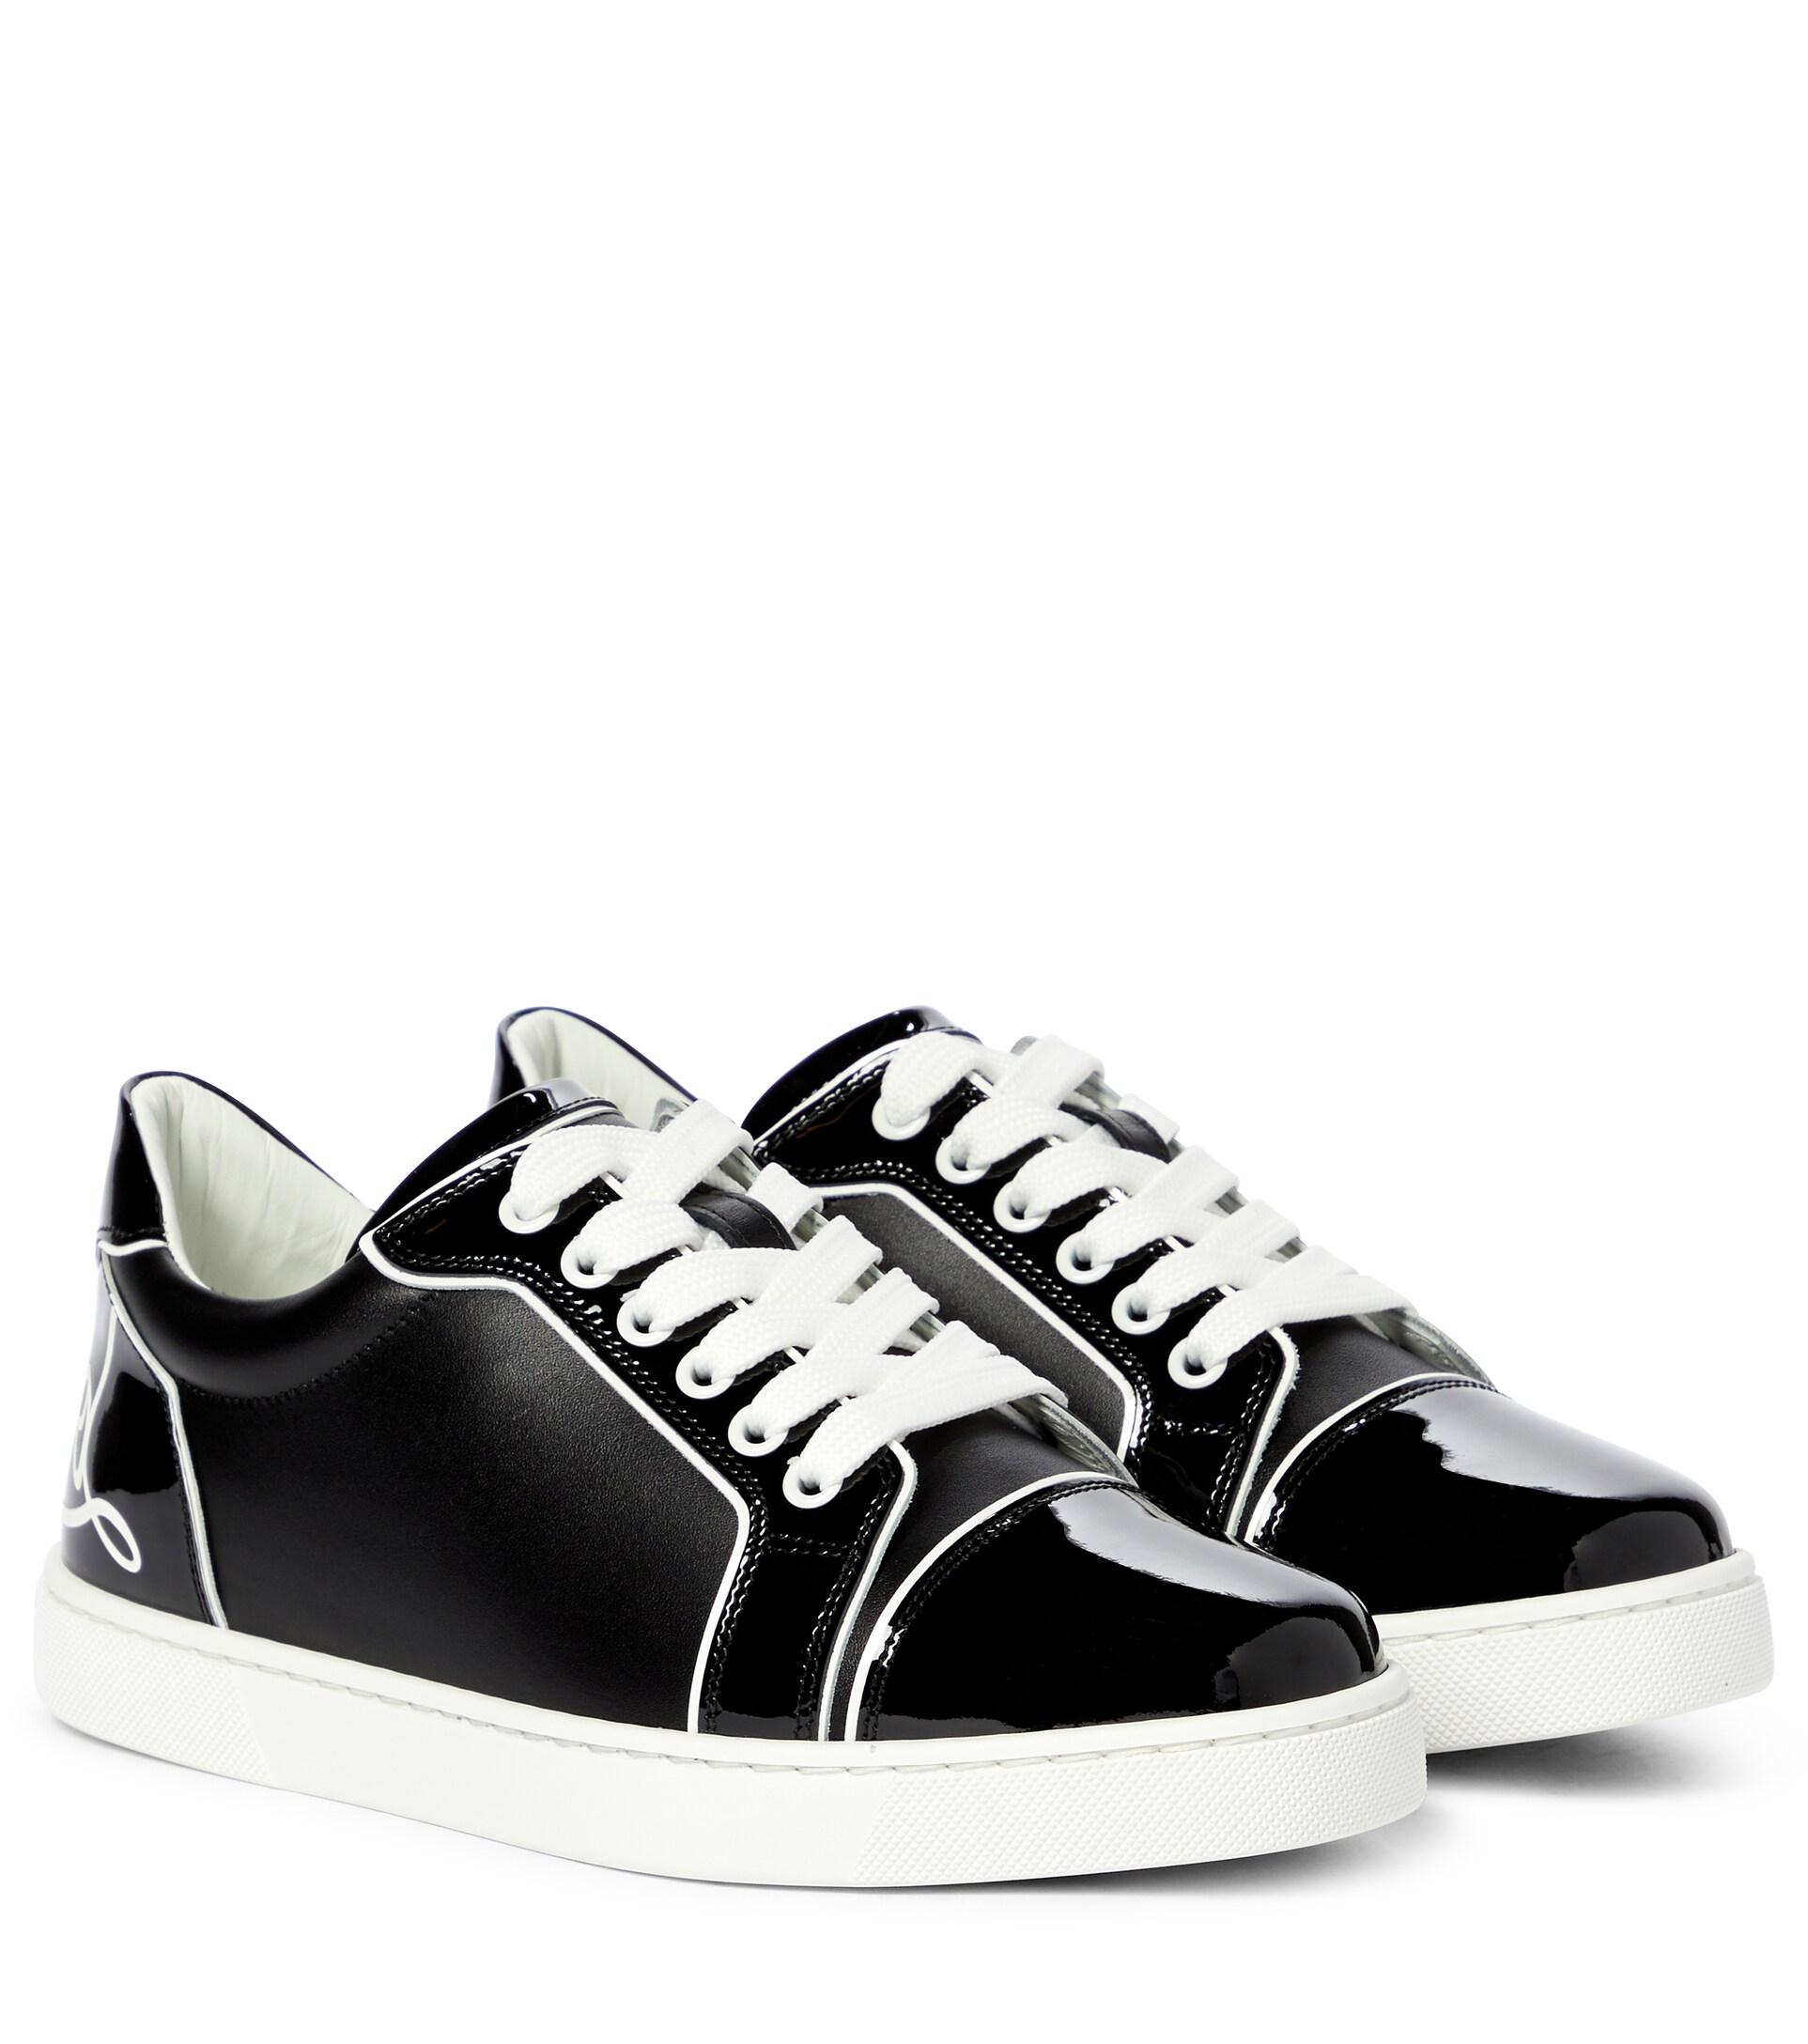 Christian Louboutin Fun Viera Leather Sneakers in Black | Lyst